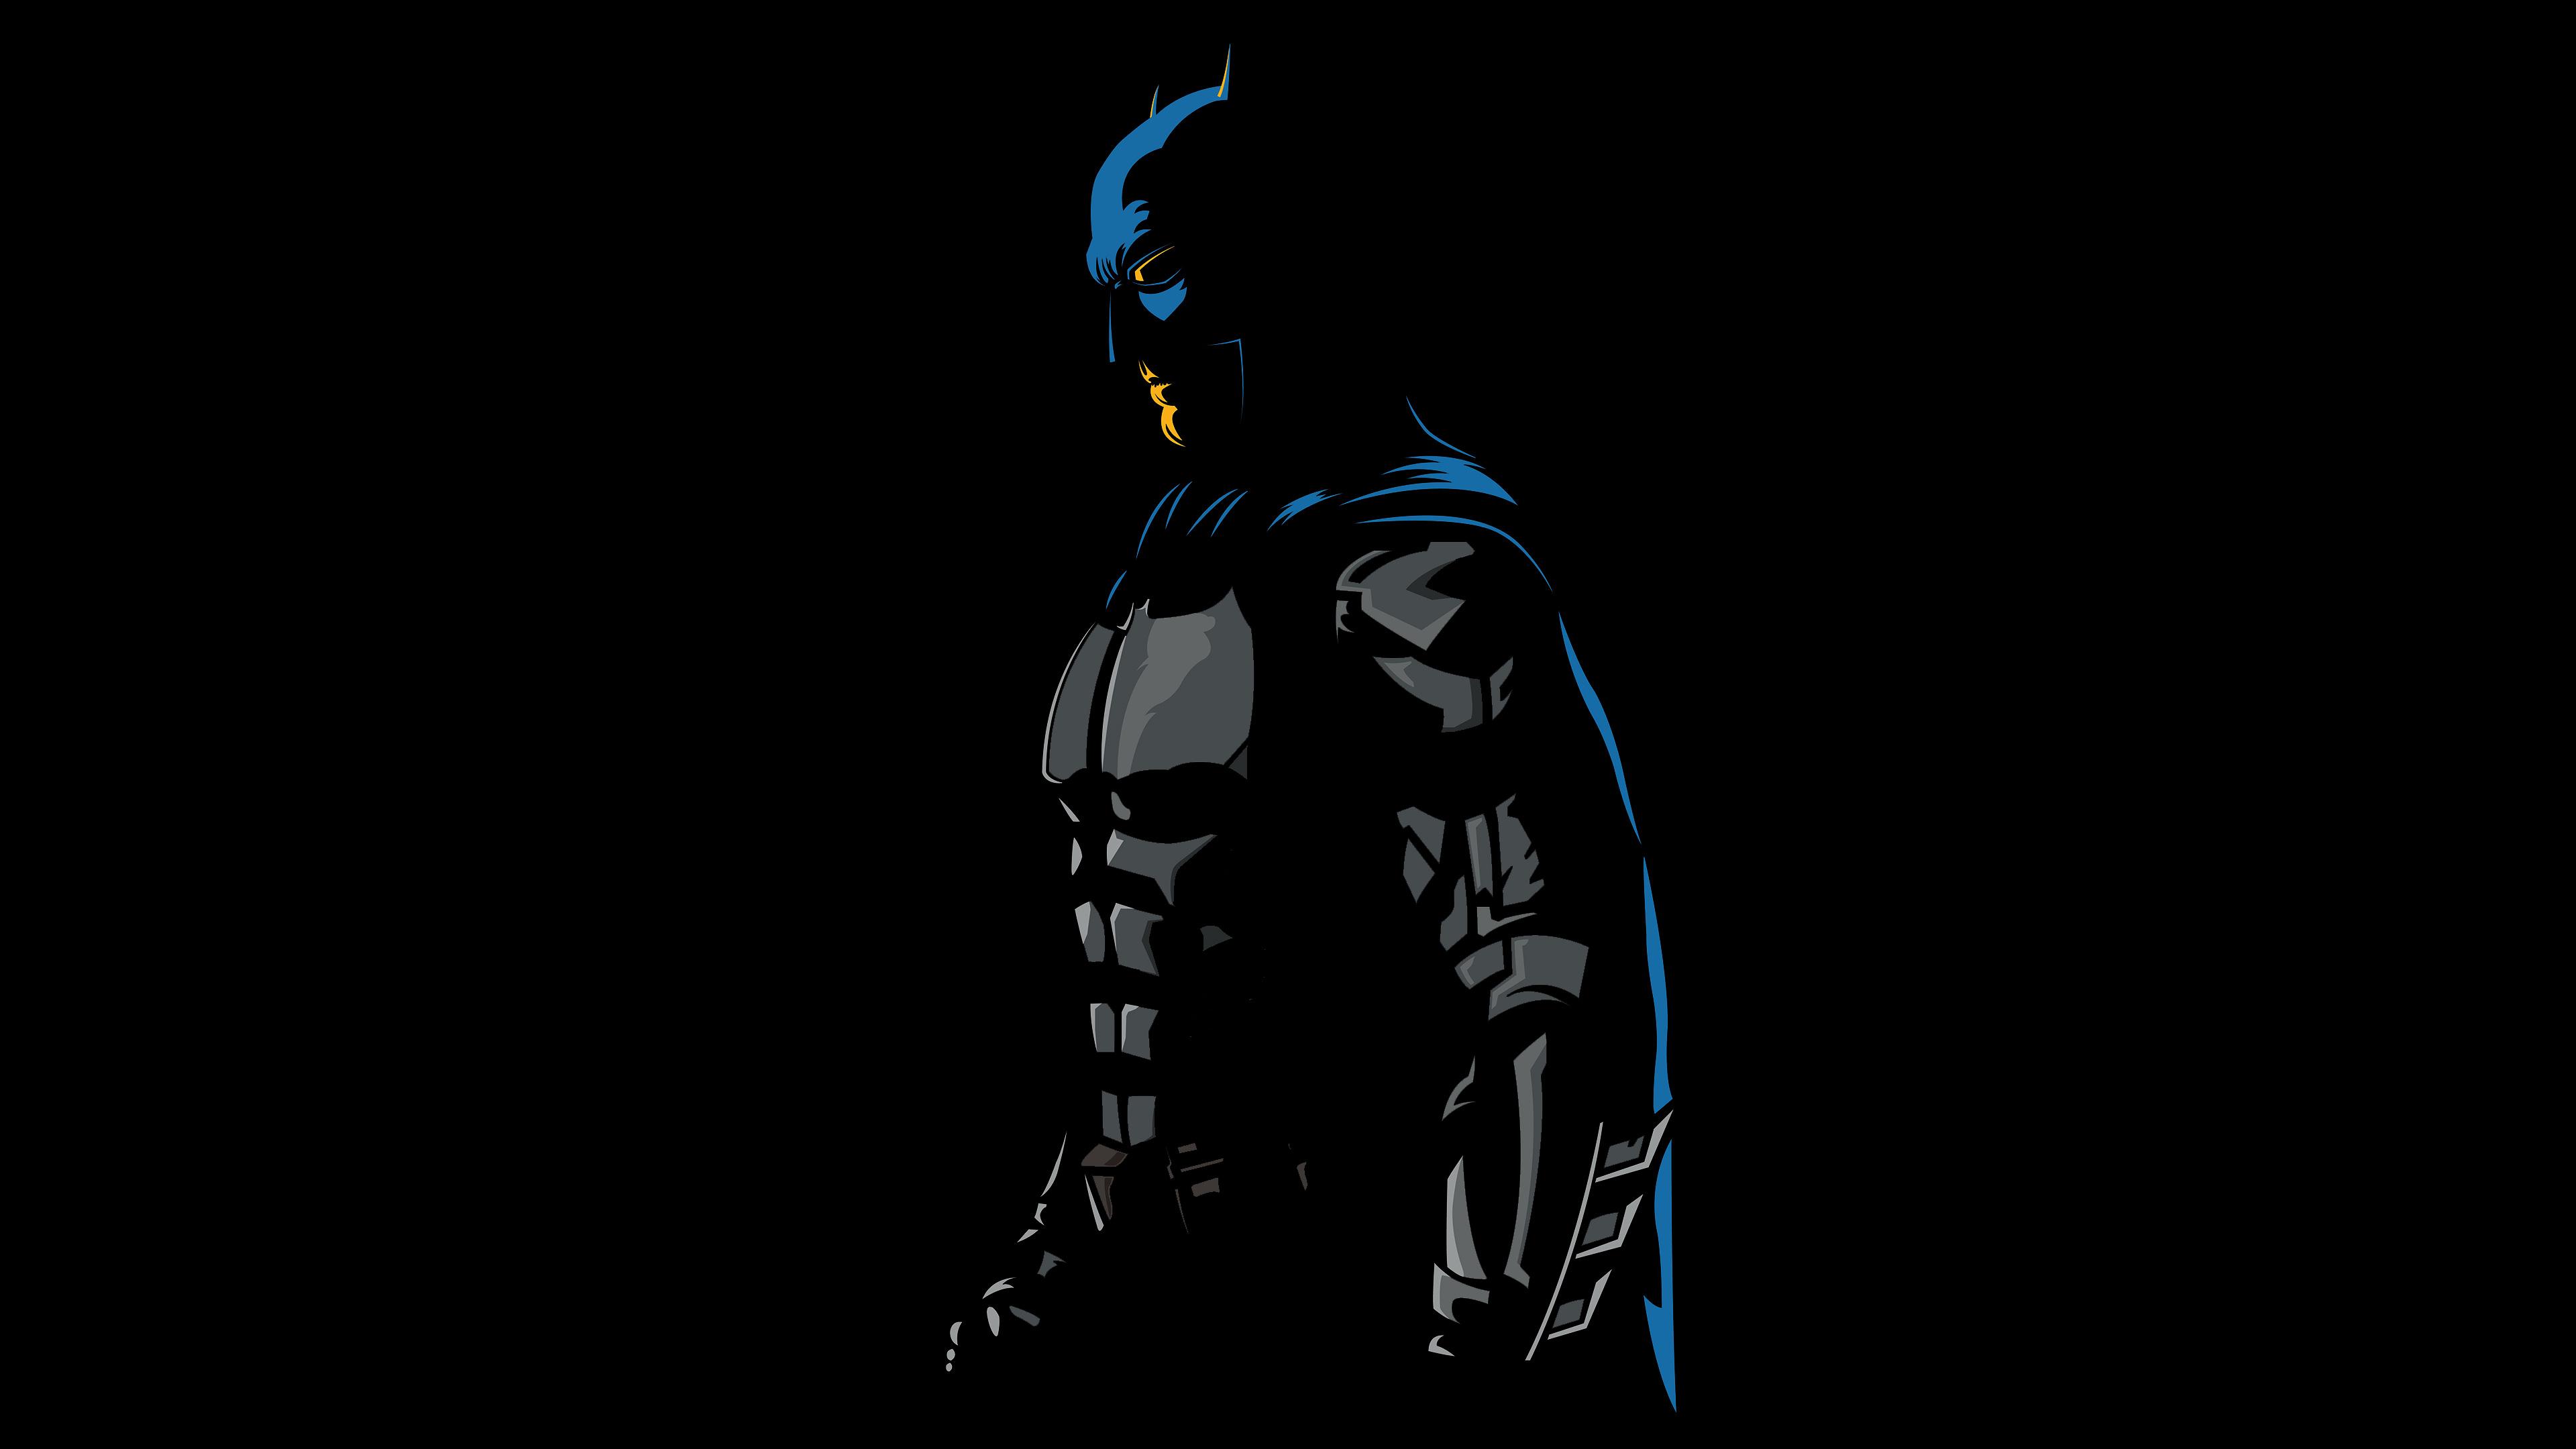 New Batman 4K Illustration Wallpapers